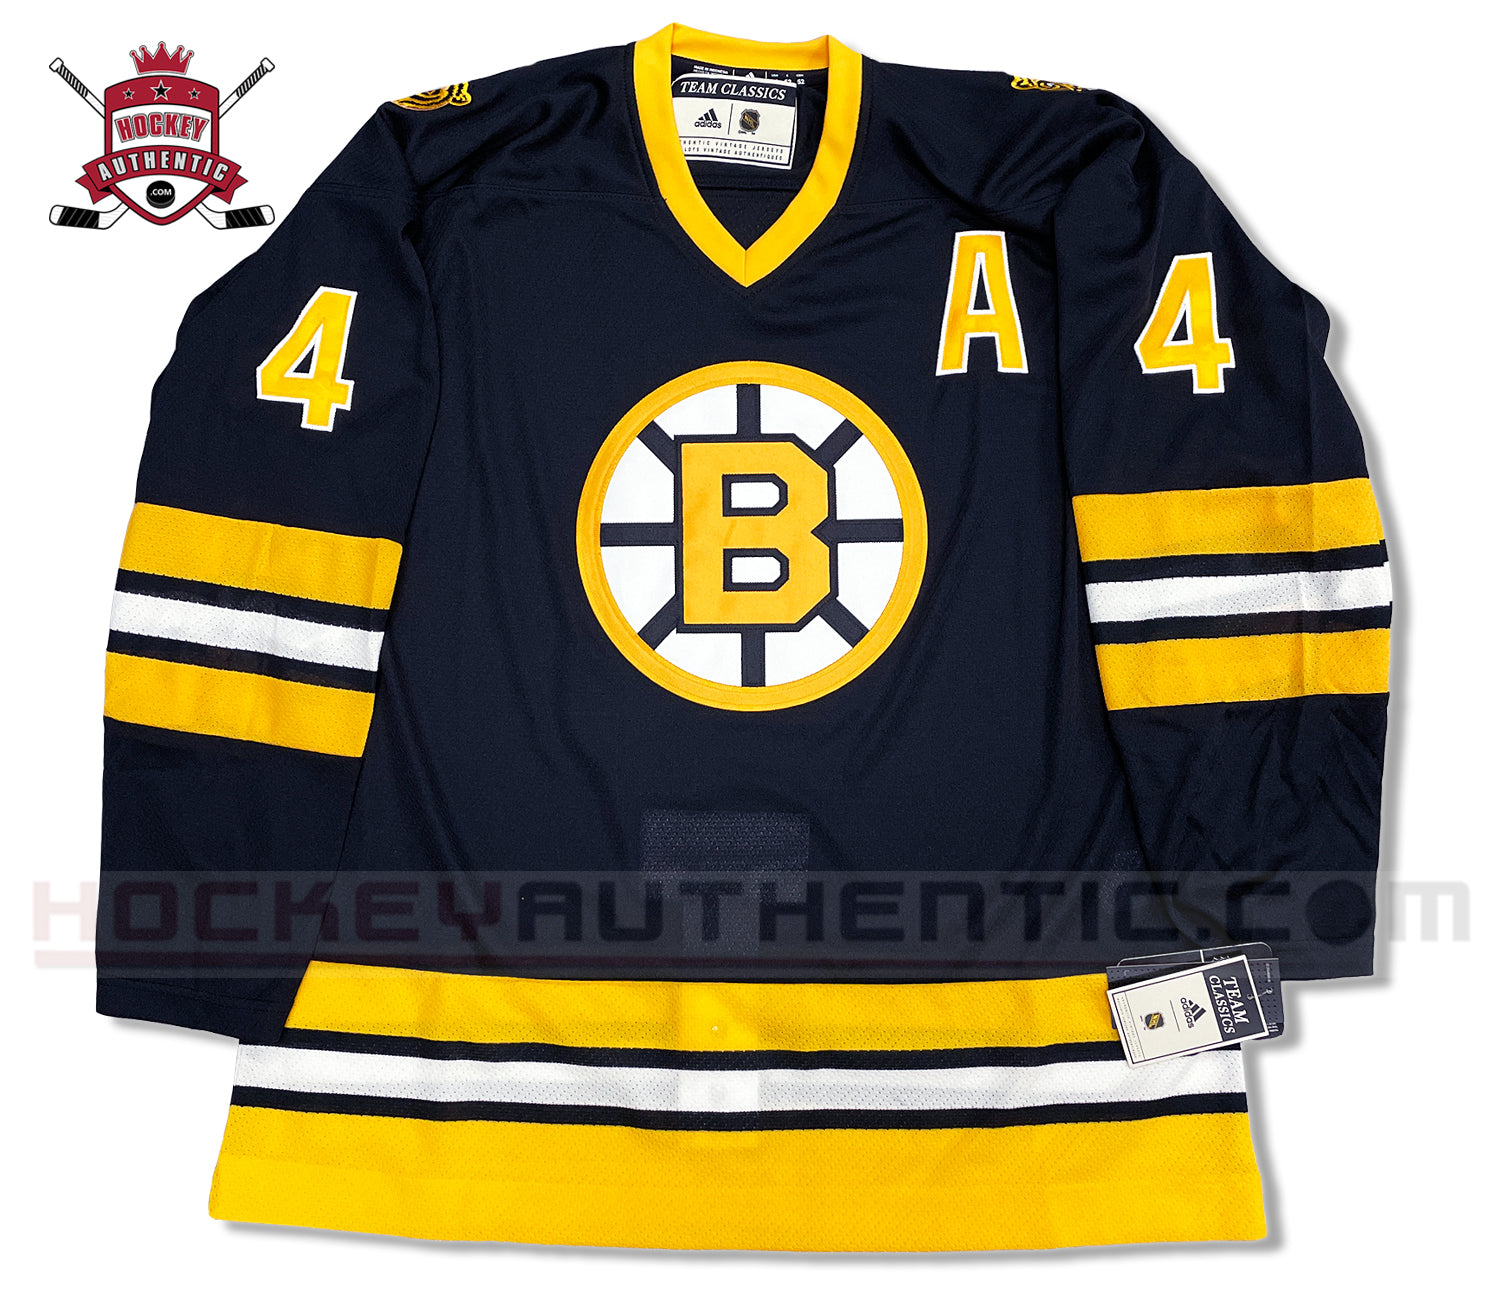 Bobby Orr Signed Bruins Adidas Jersey (Orr COA)